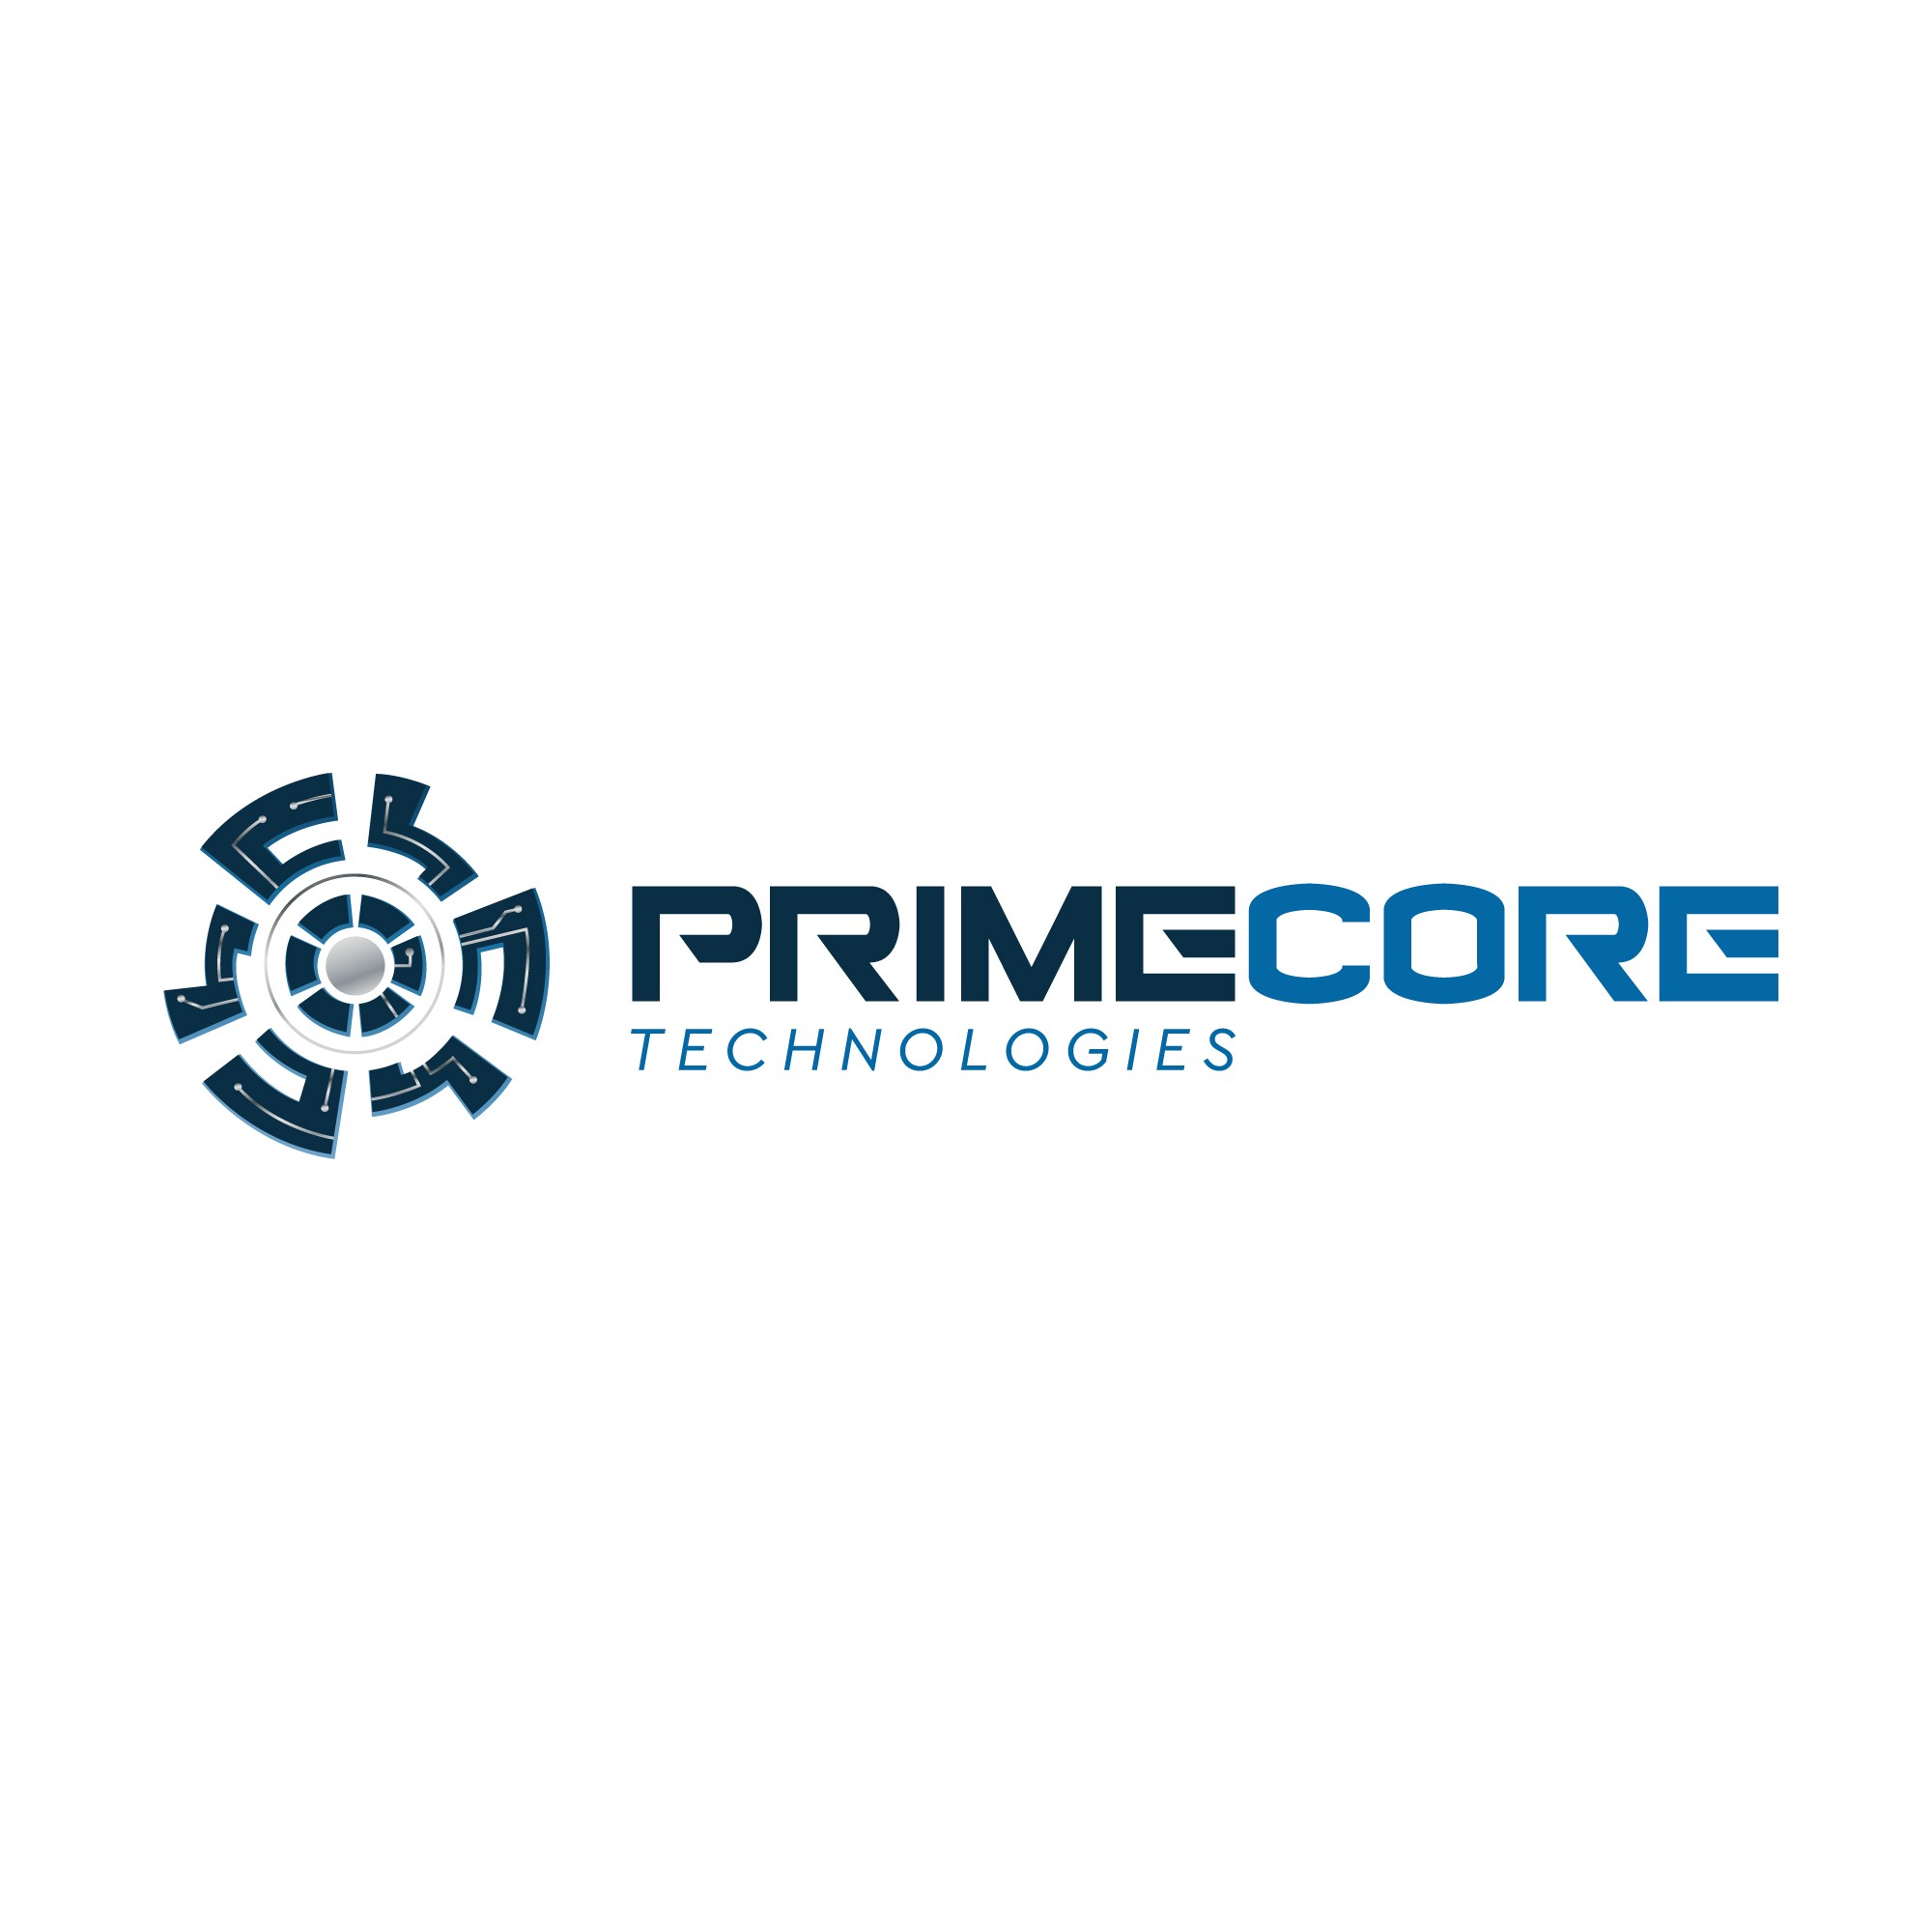 Prime Core Technologies: Revolutionizing the Digital Landscape